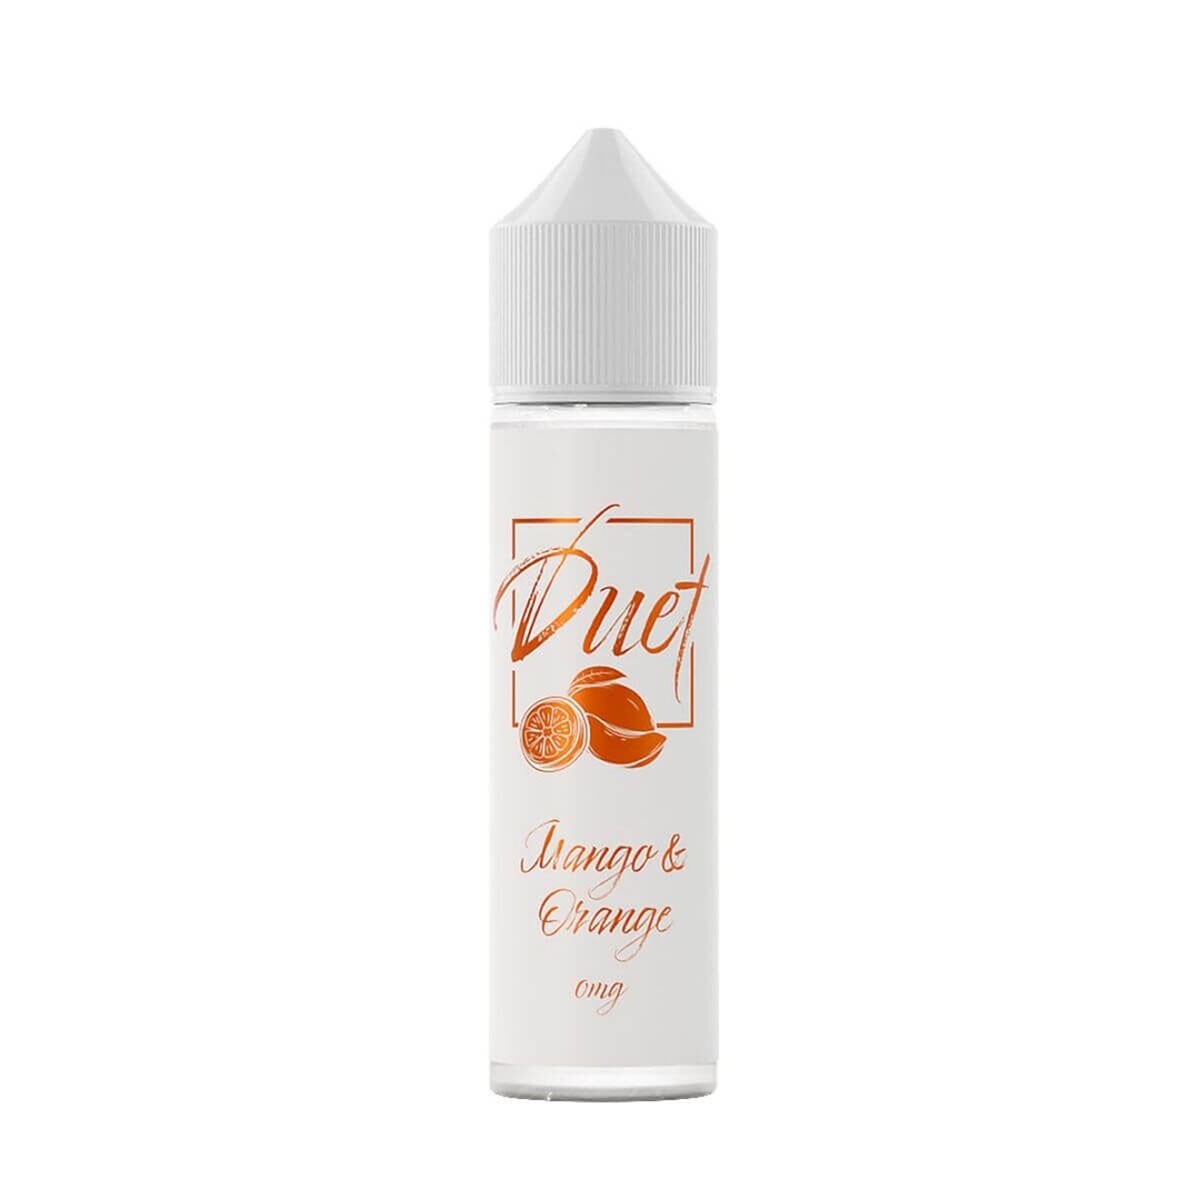 Duet mango & orange 0mg 50ml shortfill e-liquid Available at dispergo vaping uk,